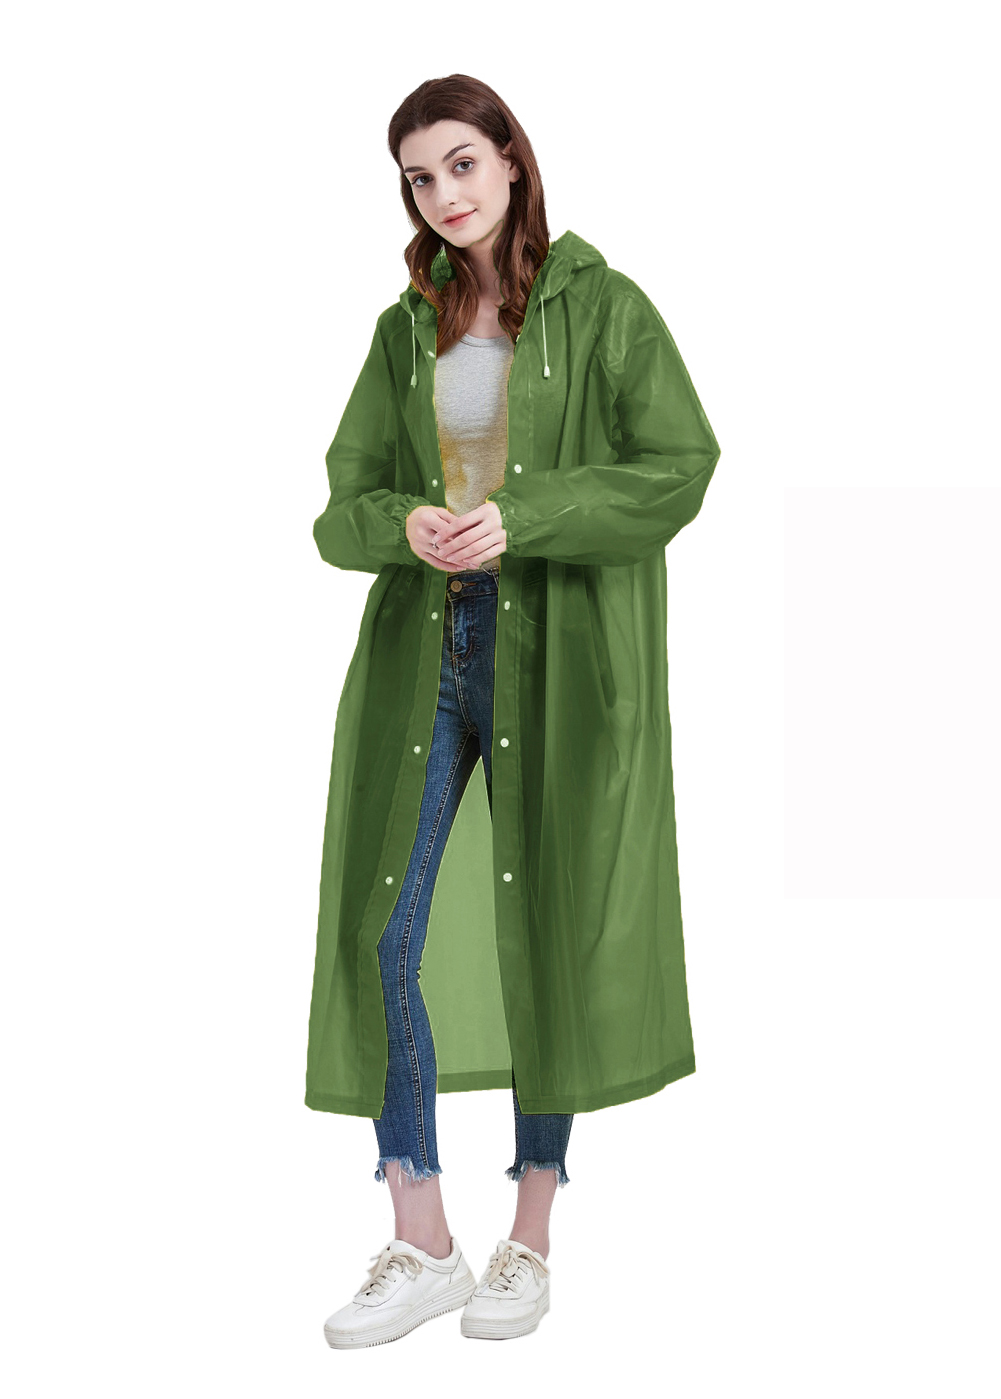 Makonus Raincoat for Adults, Portable EVA Rain Coats Reusable Rain Poncho with Hood and Elastic Cuff Sleeves